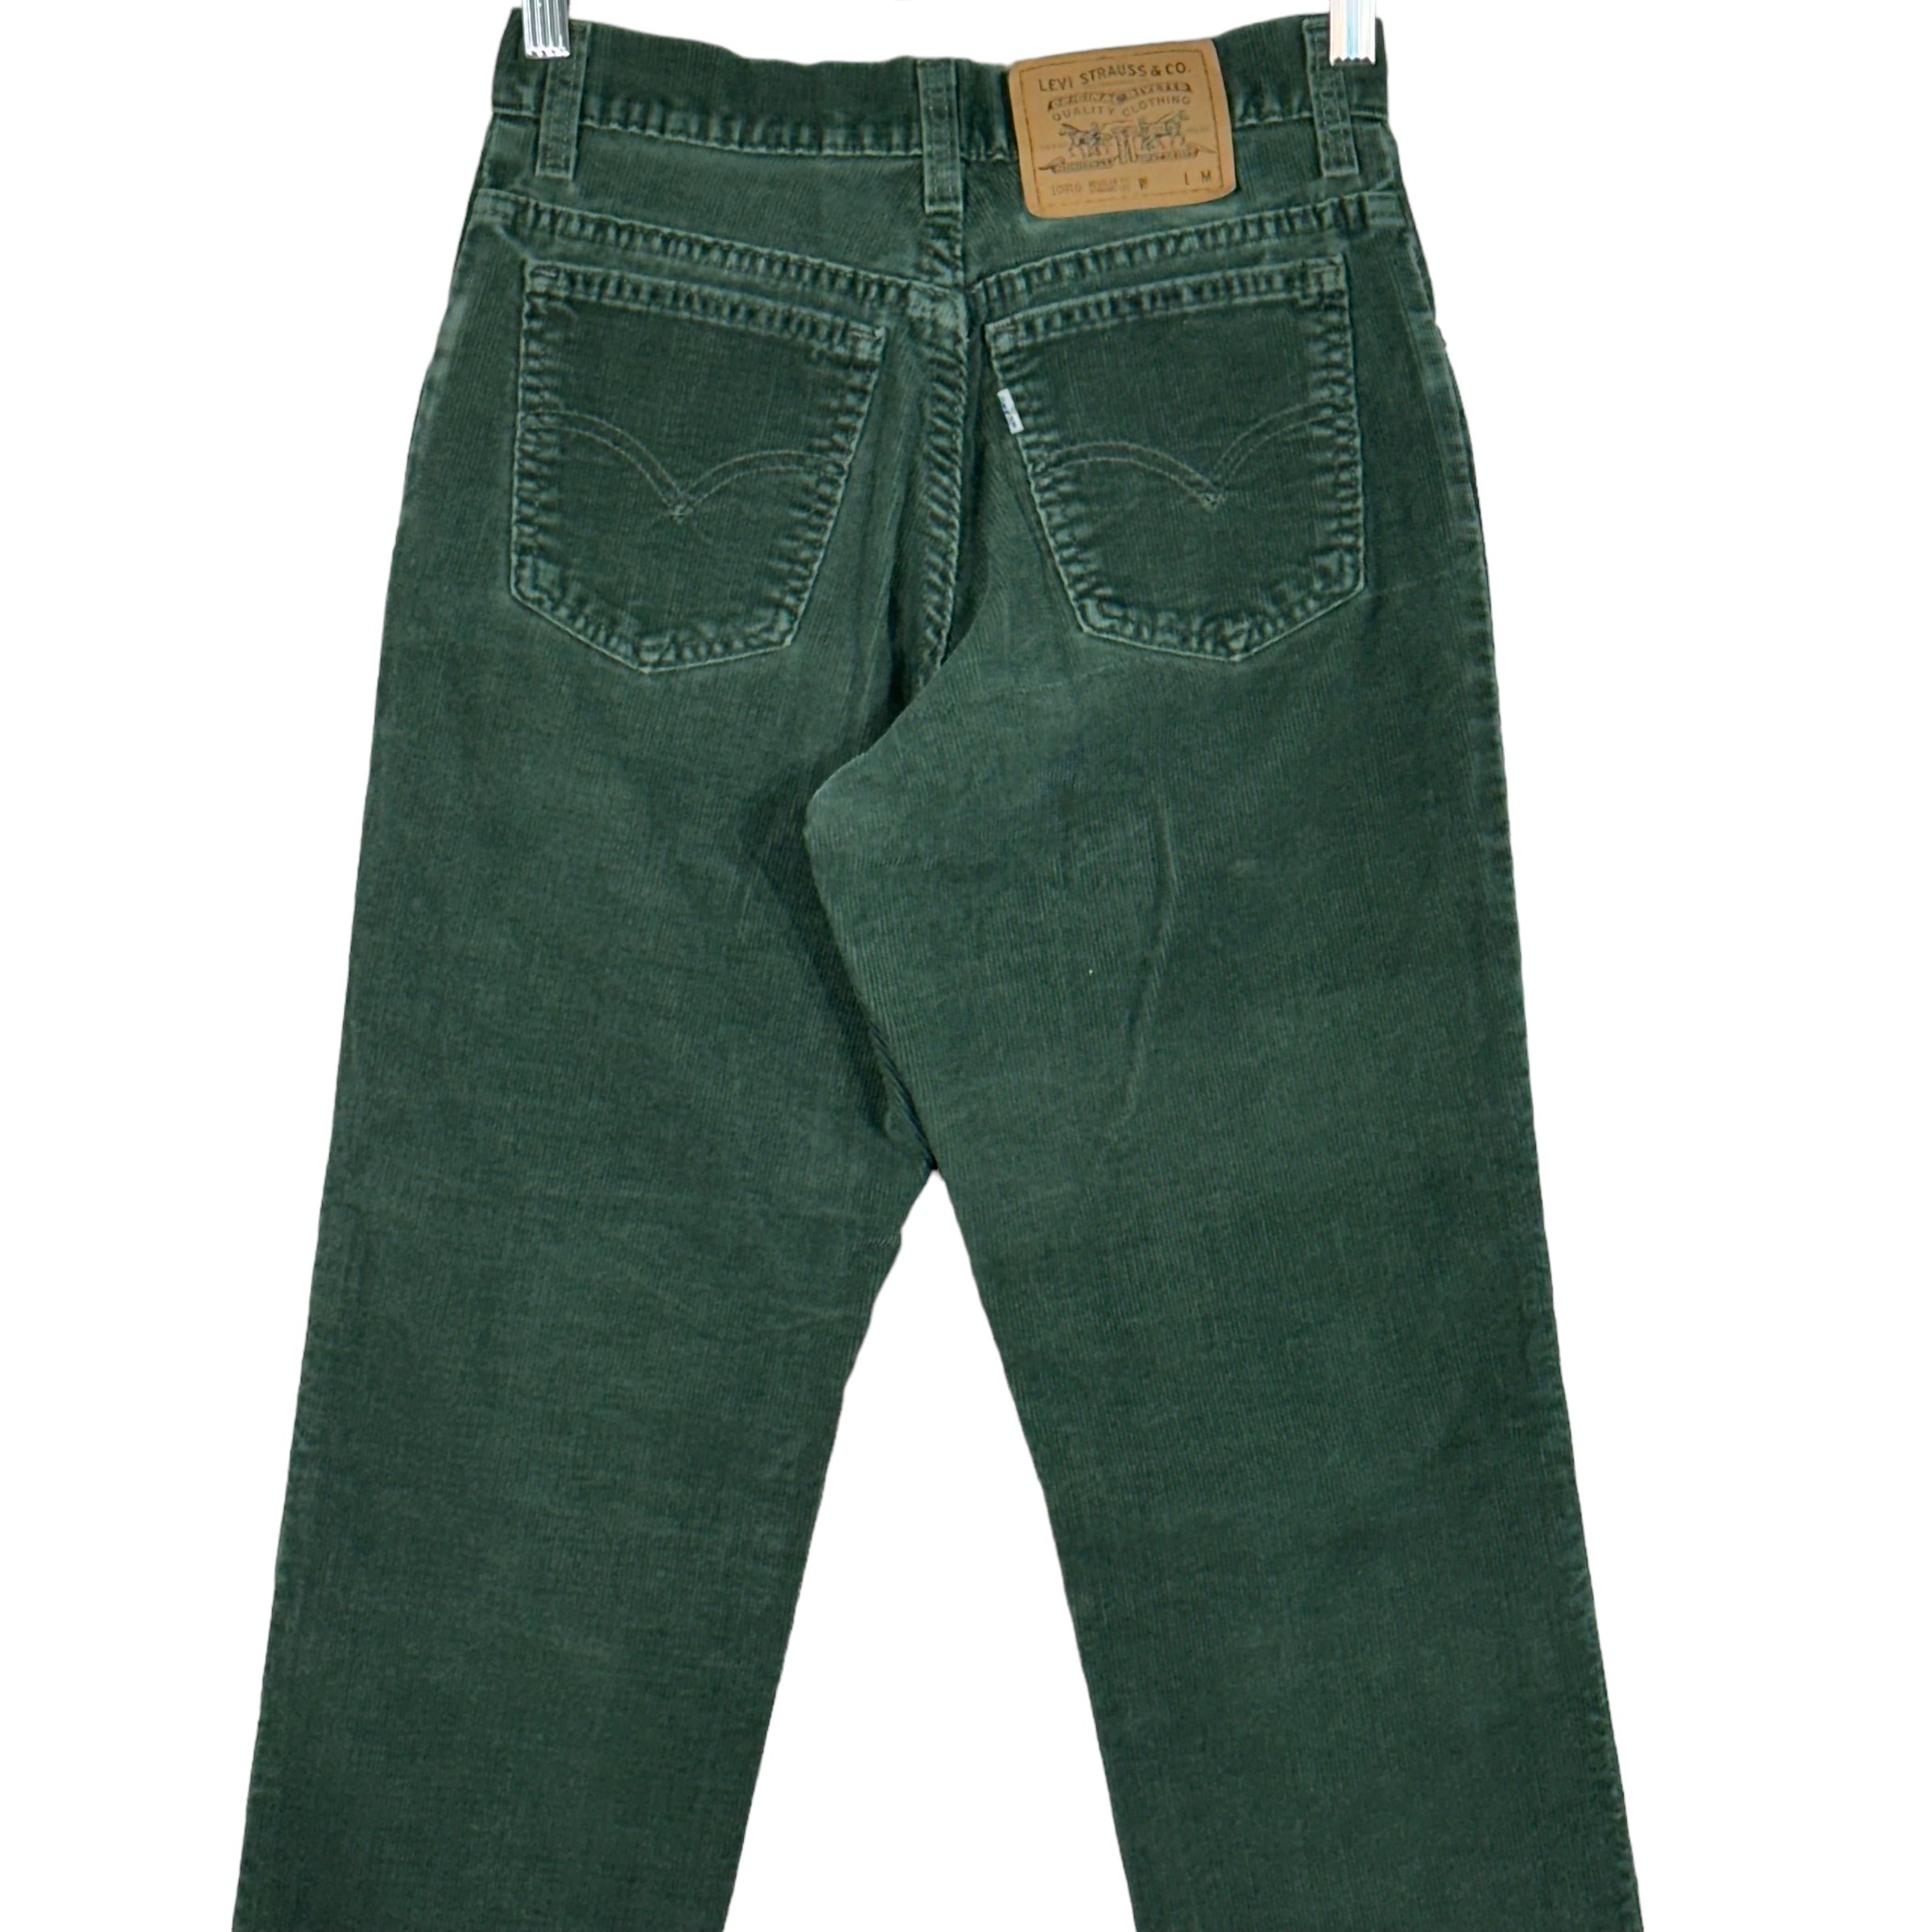 Vintage Levi's Corduroy Skinny Jeans 90s